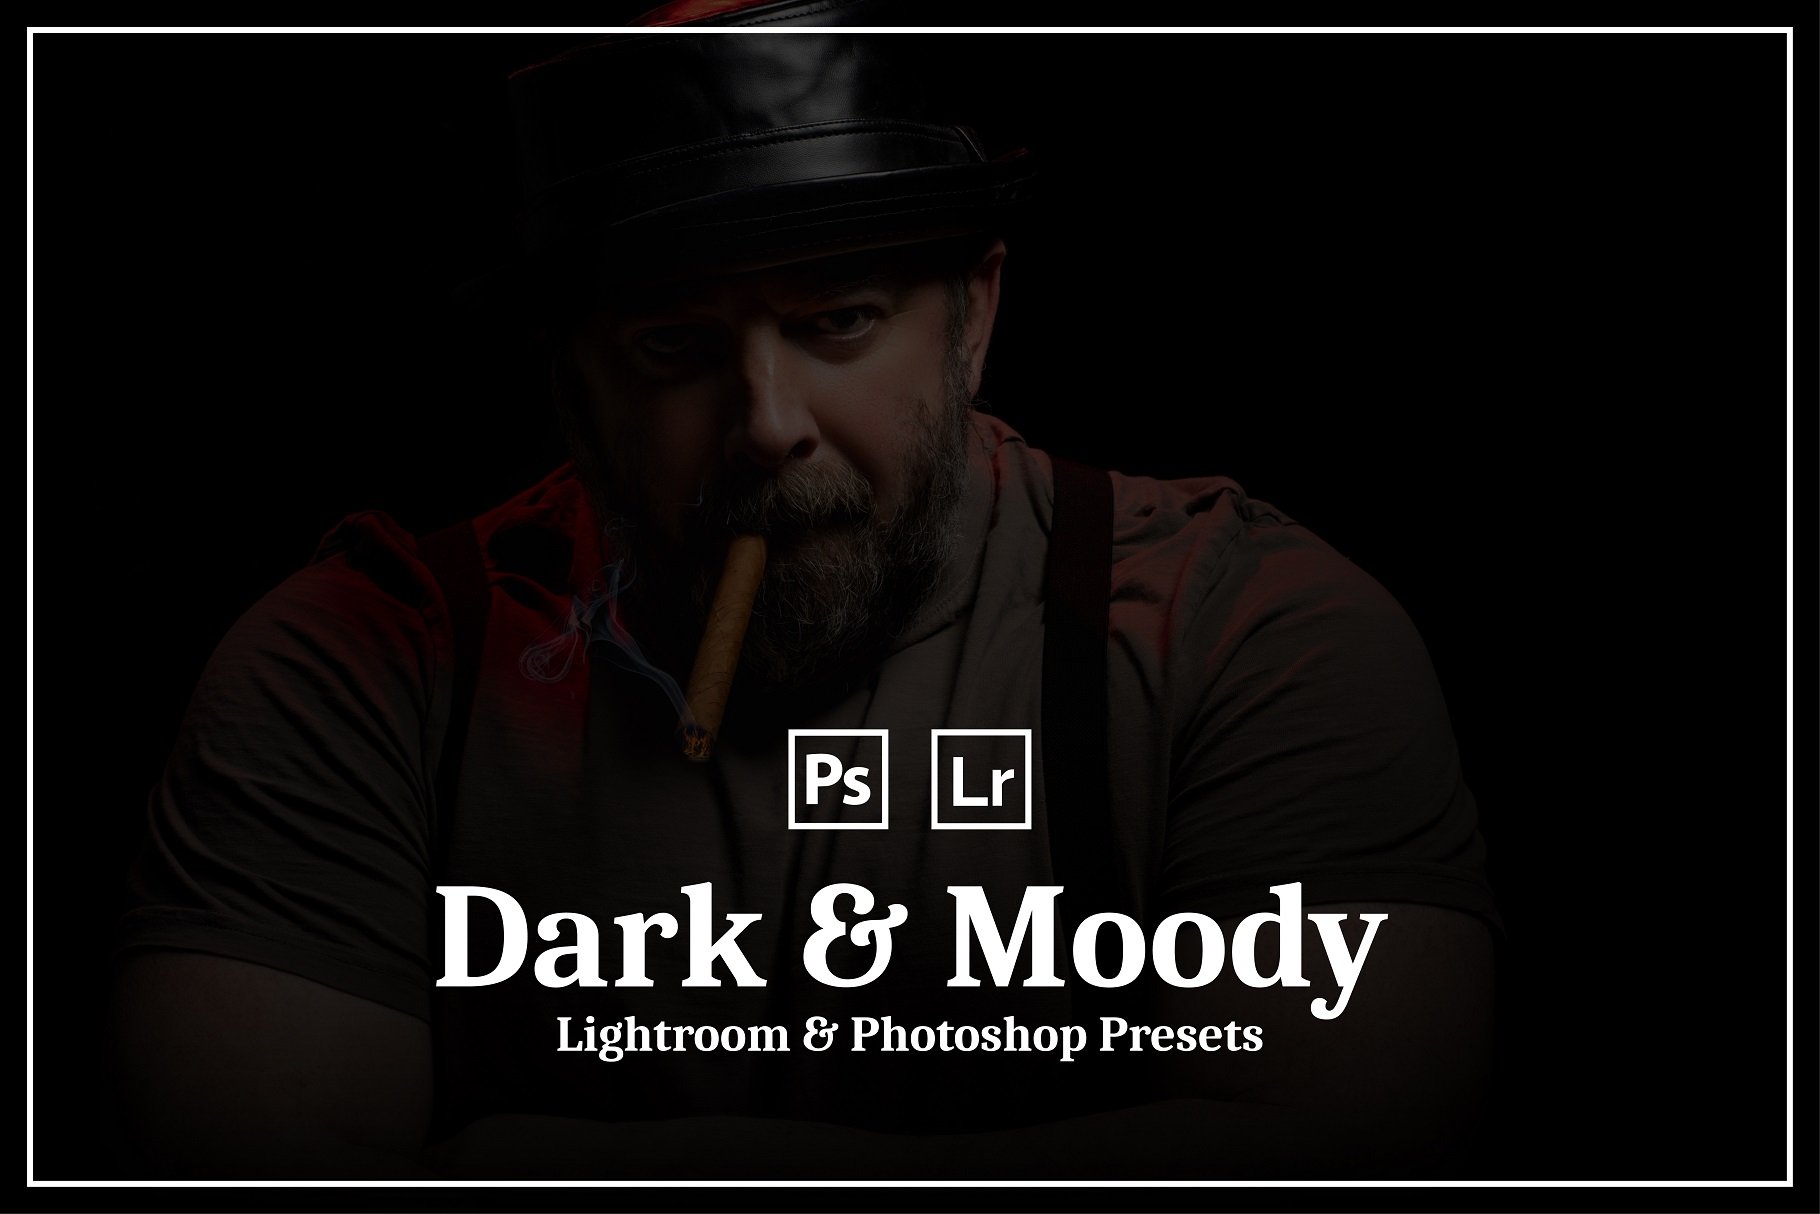 Dark & Moody Lightroom Presetscover image.